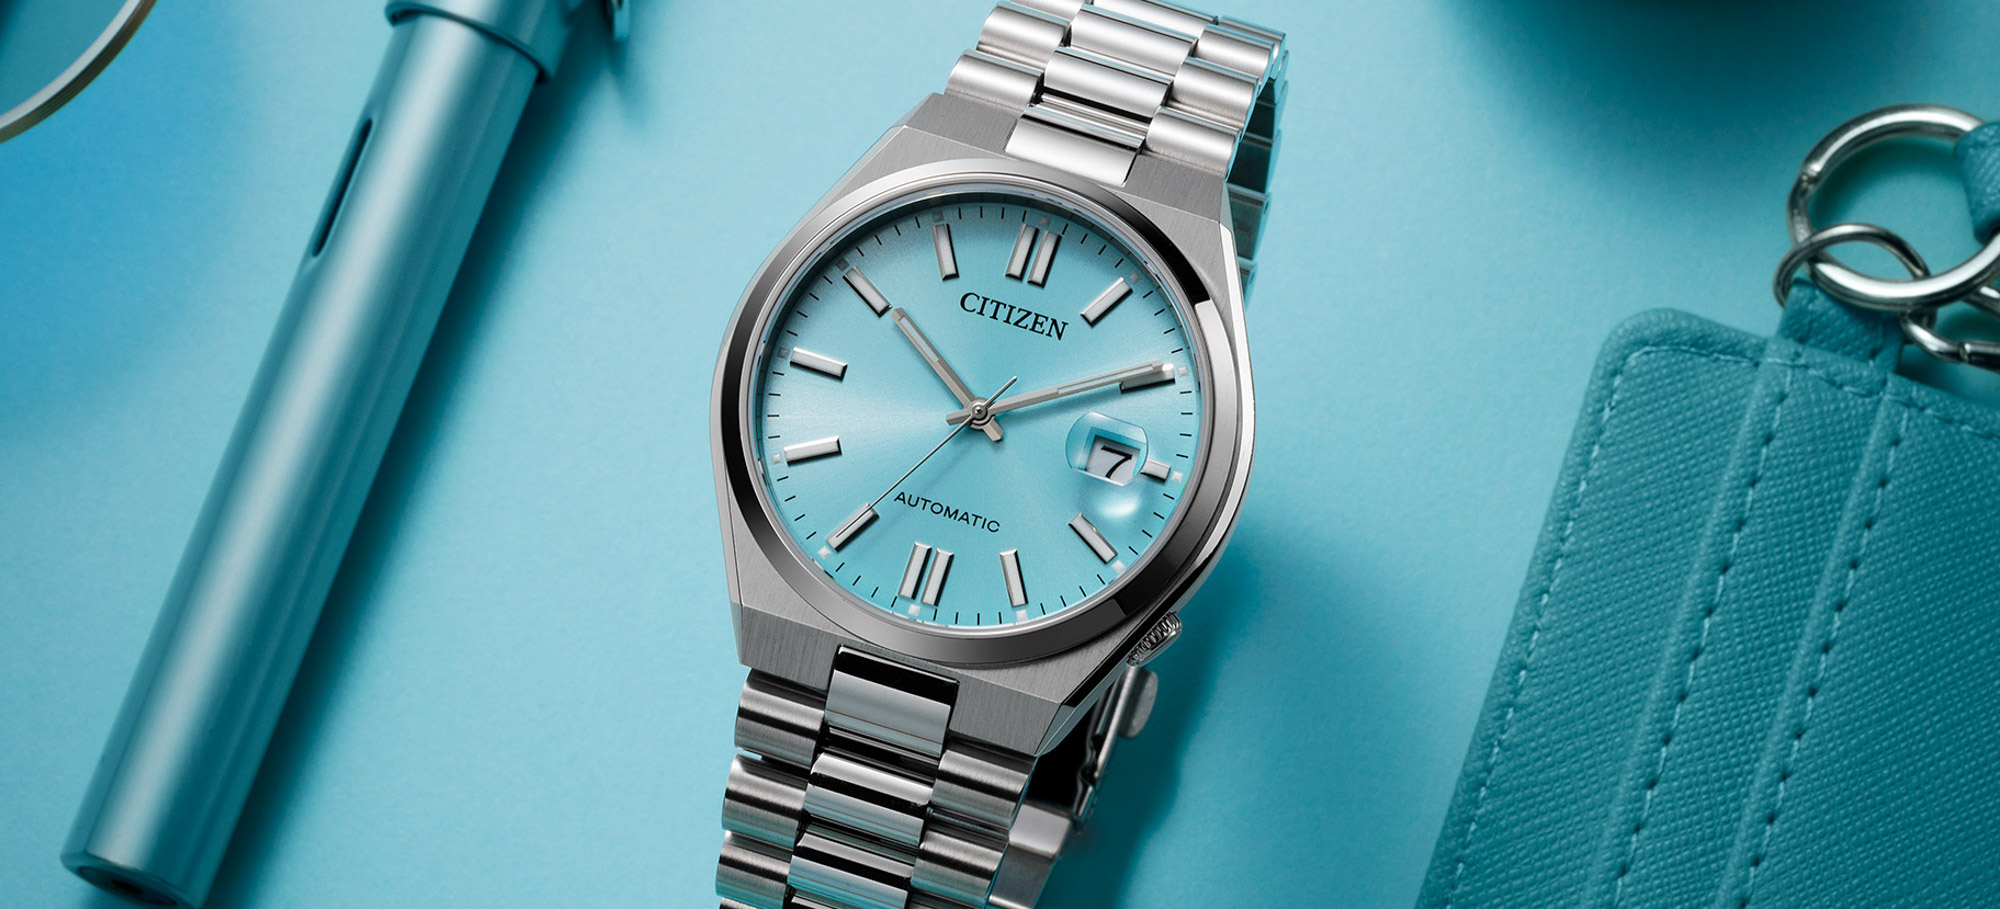 The Citizen NJ015 Automatic Tsuyosa Watch Comes To The U.S. Market